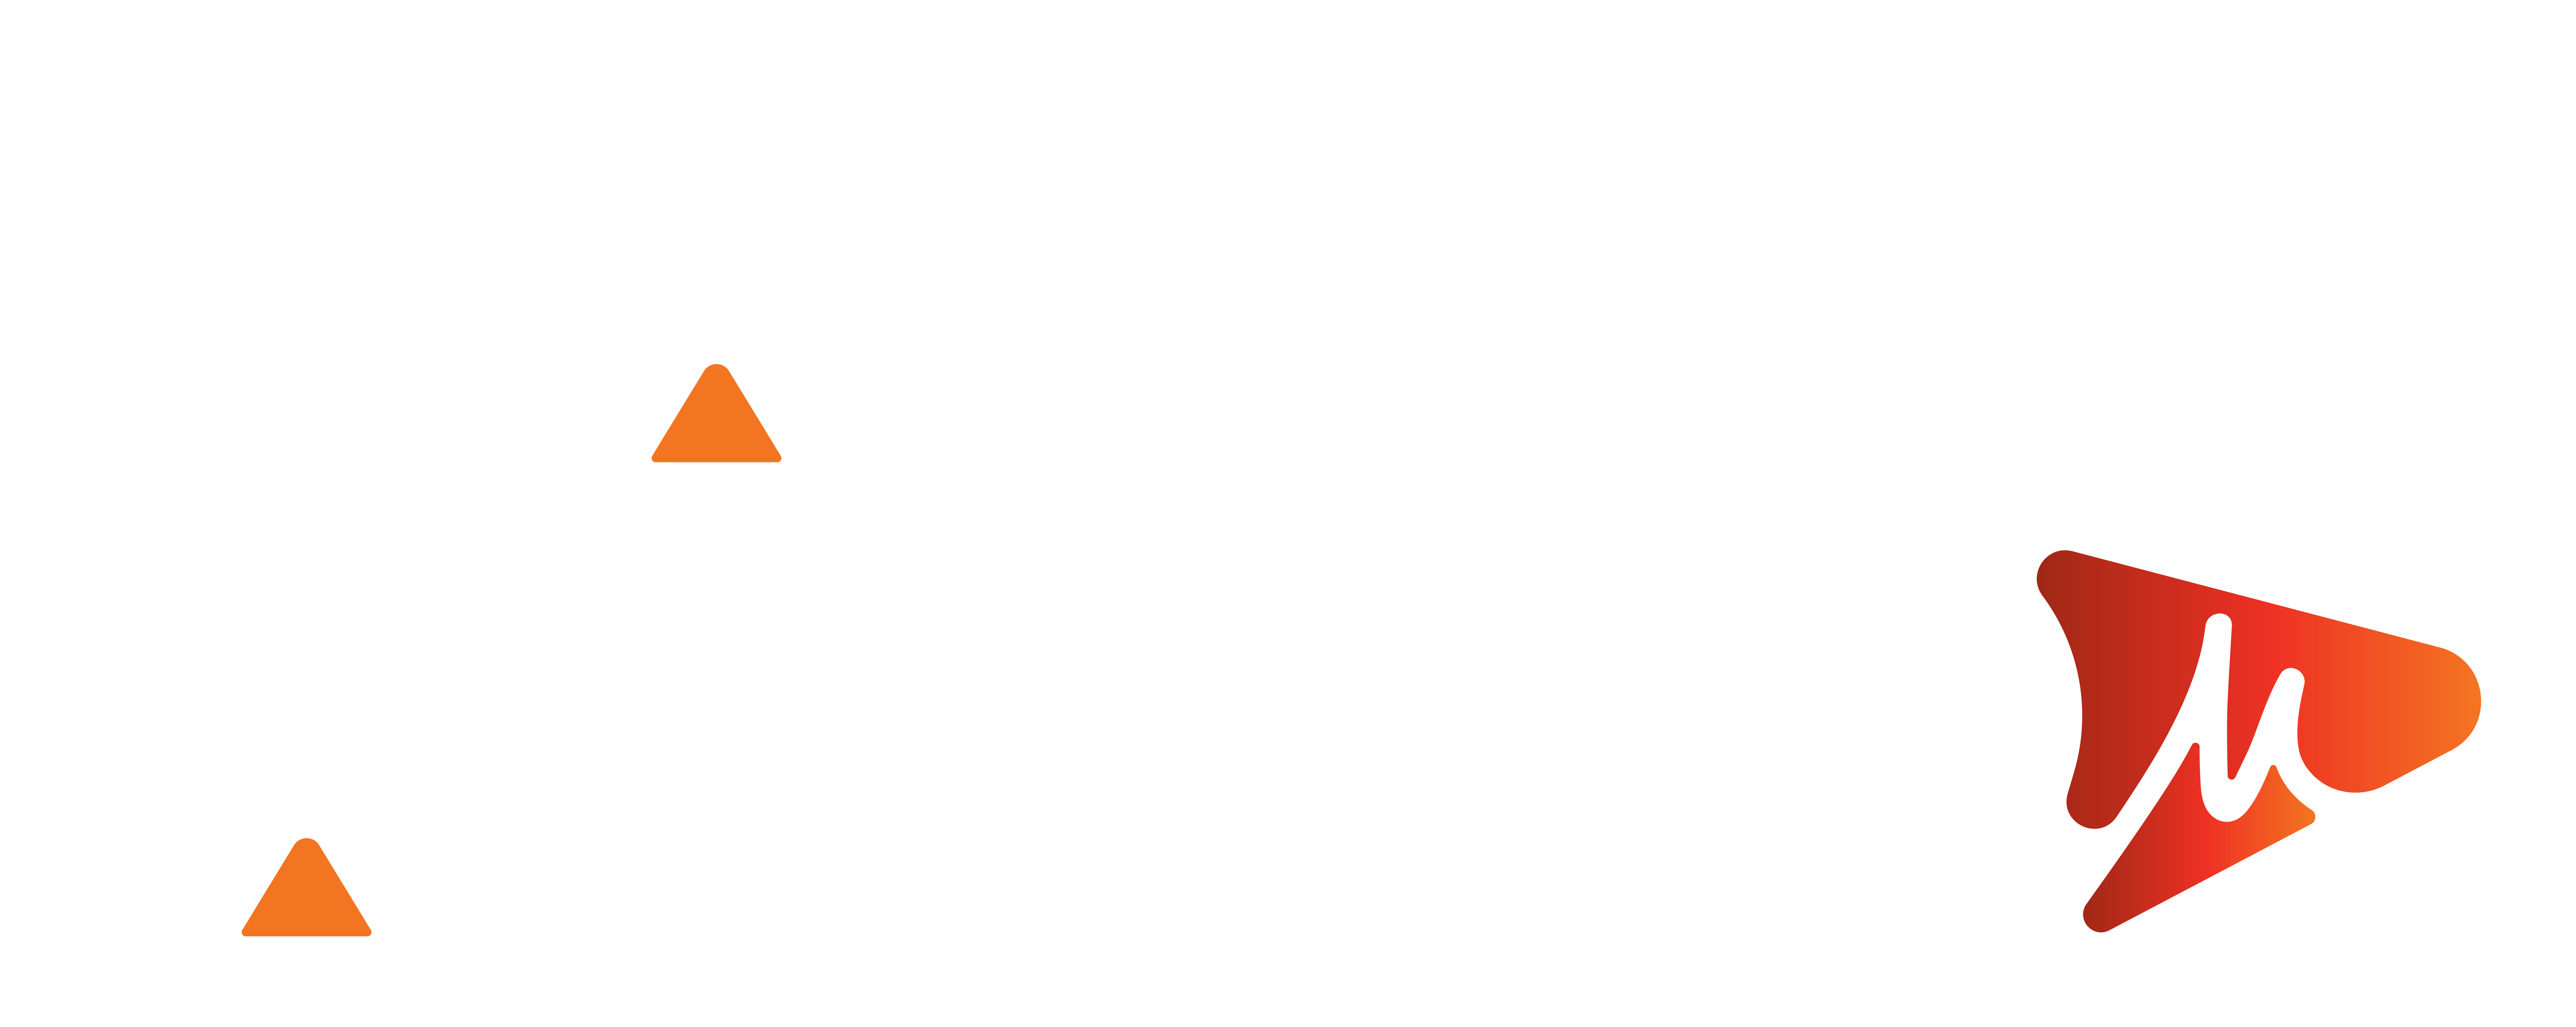 MANGEE AUDIO logo white